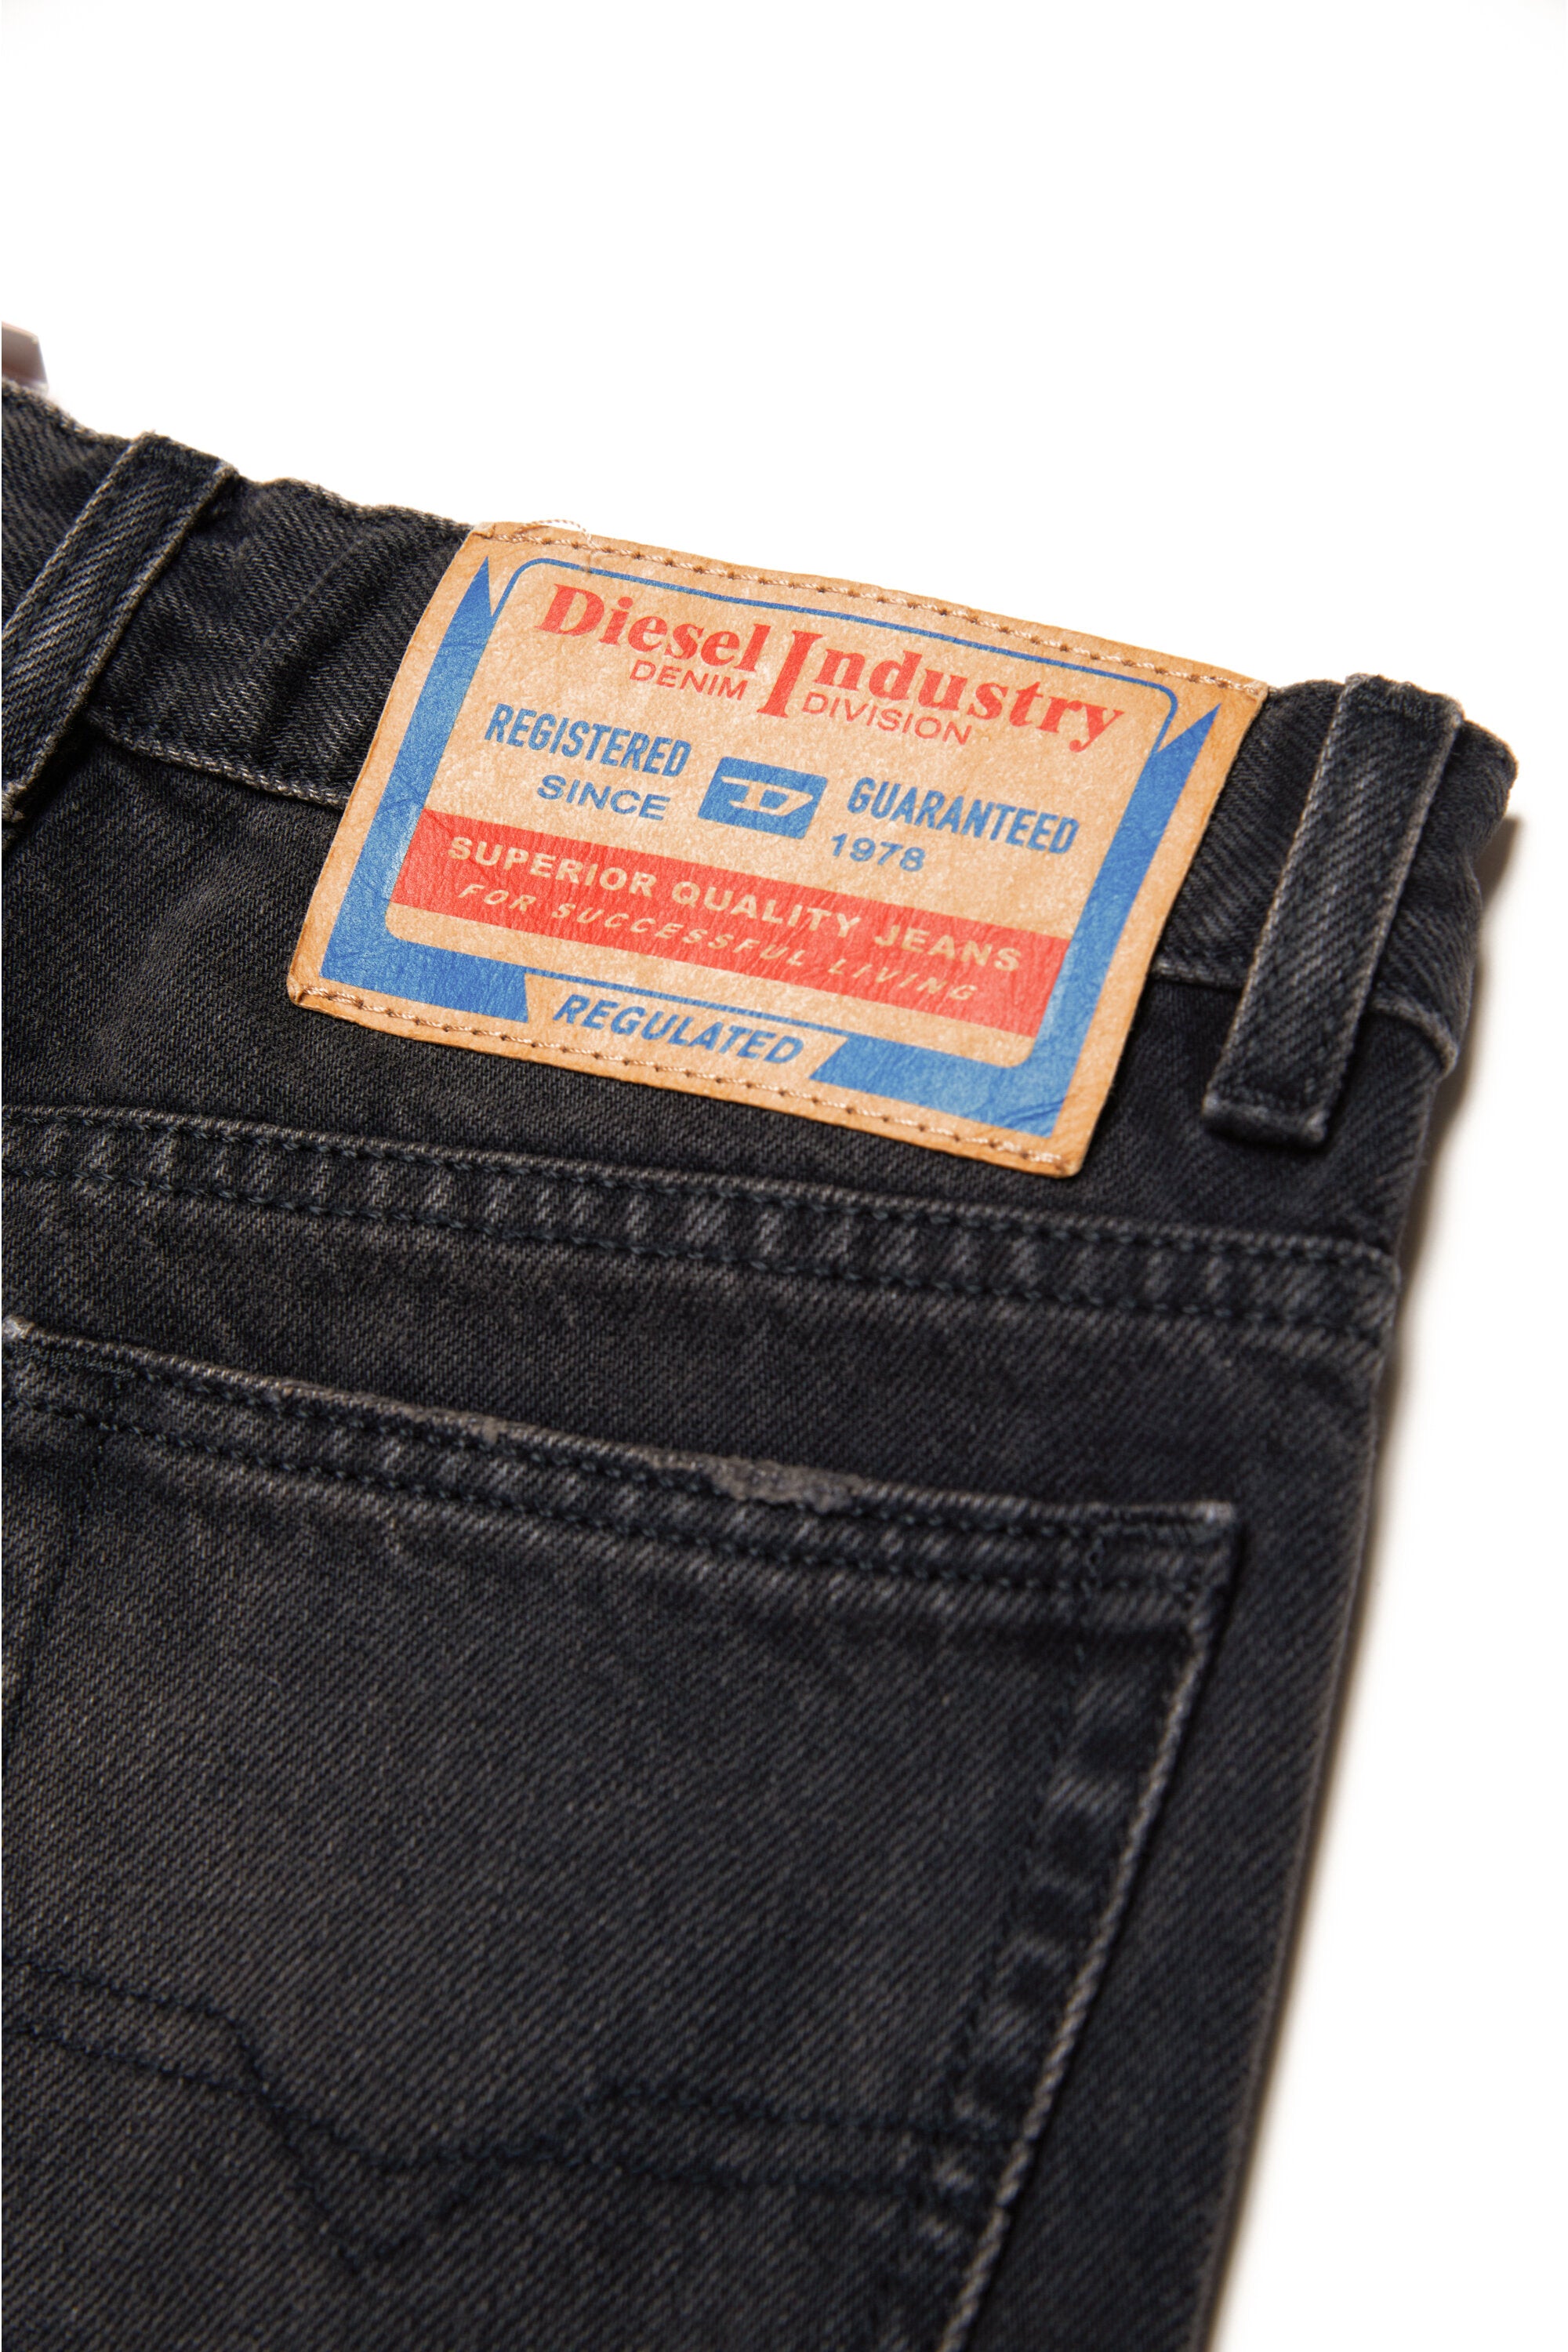 Black gradient straight jeans - 2001 D-Macro